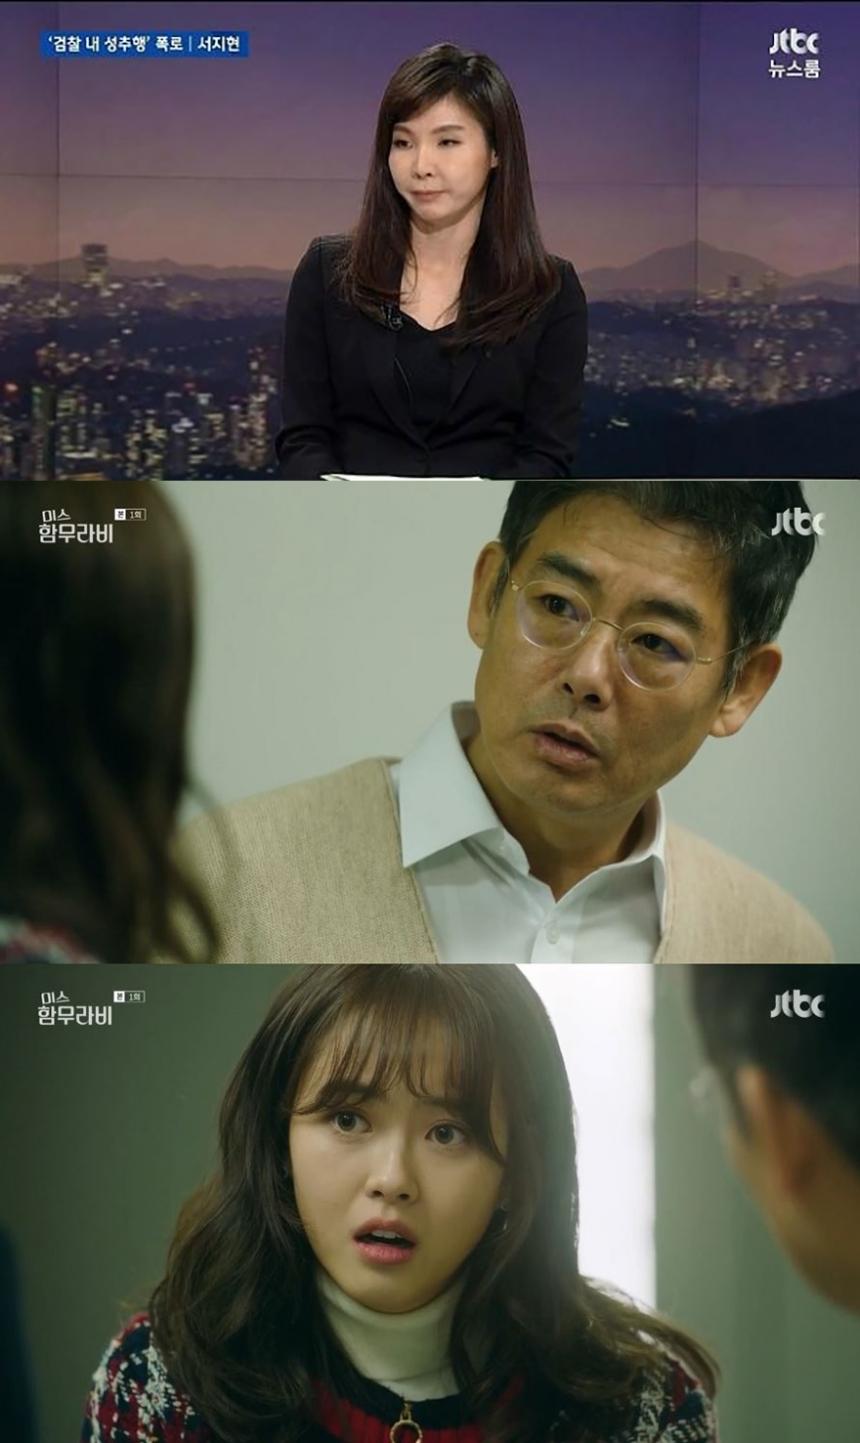 jtbc 뉴스 영상 캡처 / JTBC ‘미스 함무라비’ 영상 캡처